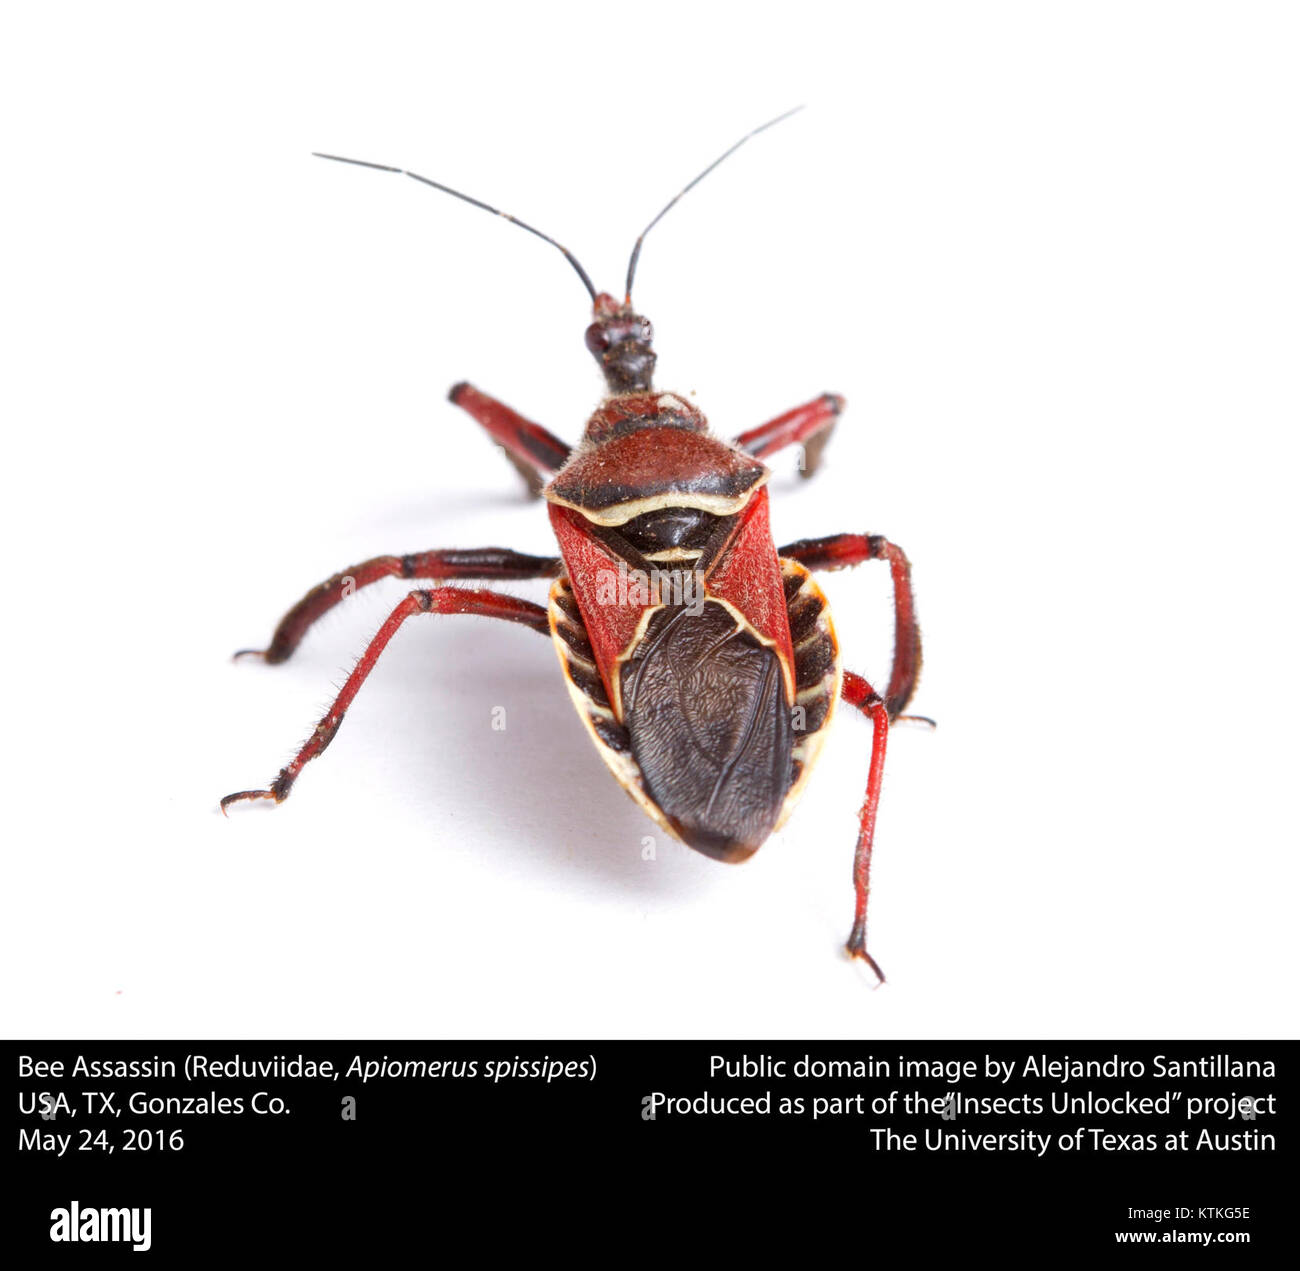 Biene Assassin (Reduviidae, Apiomerus spissipes) (27596377801) Stockfoto